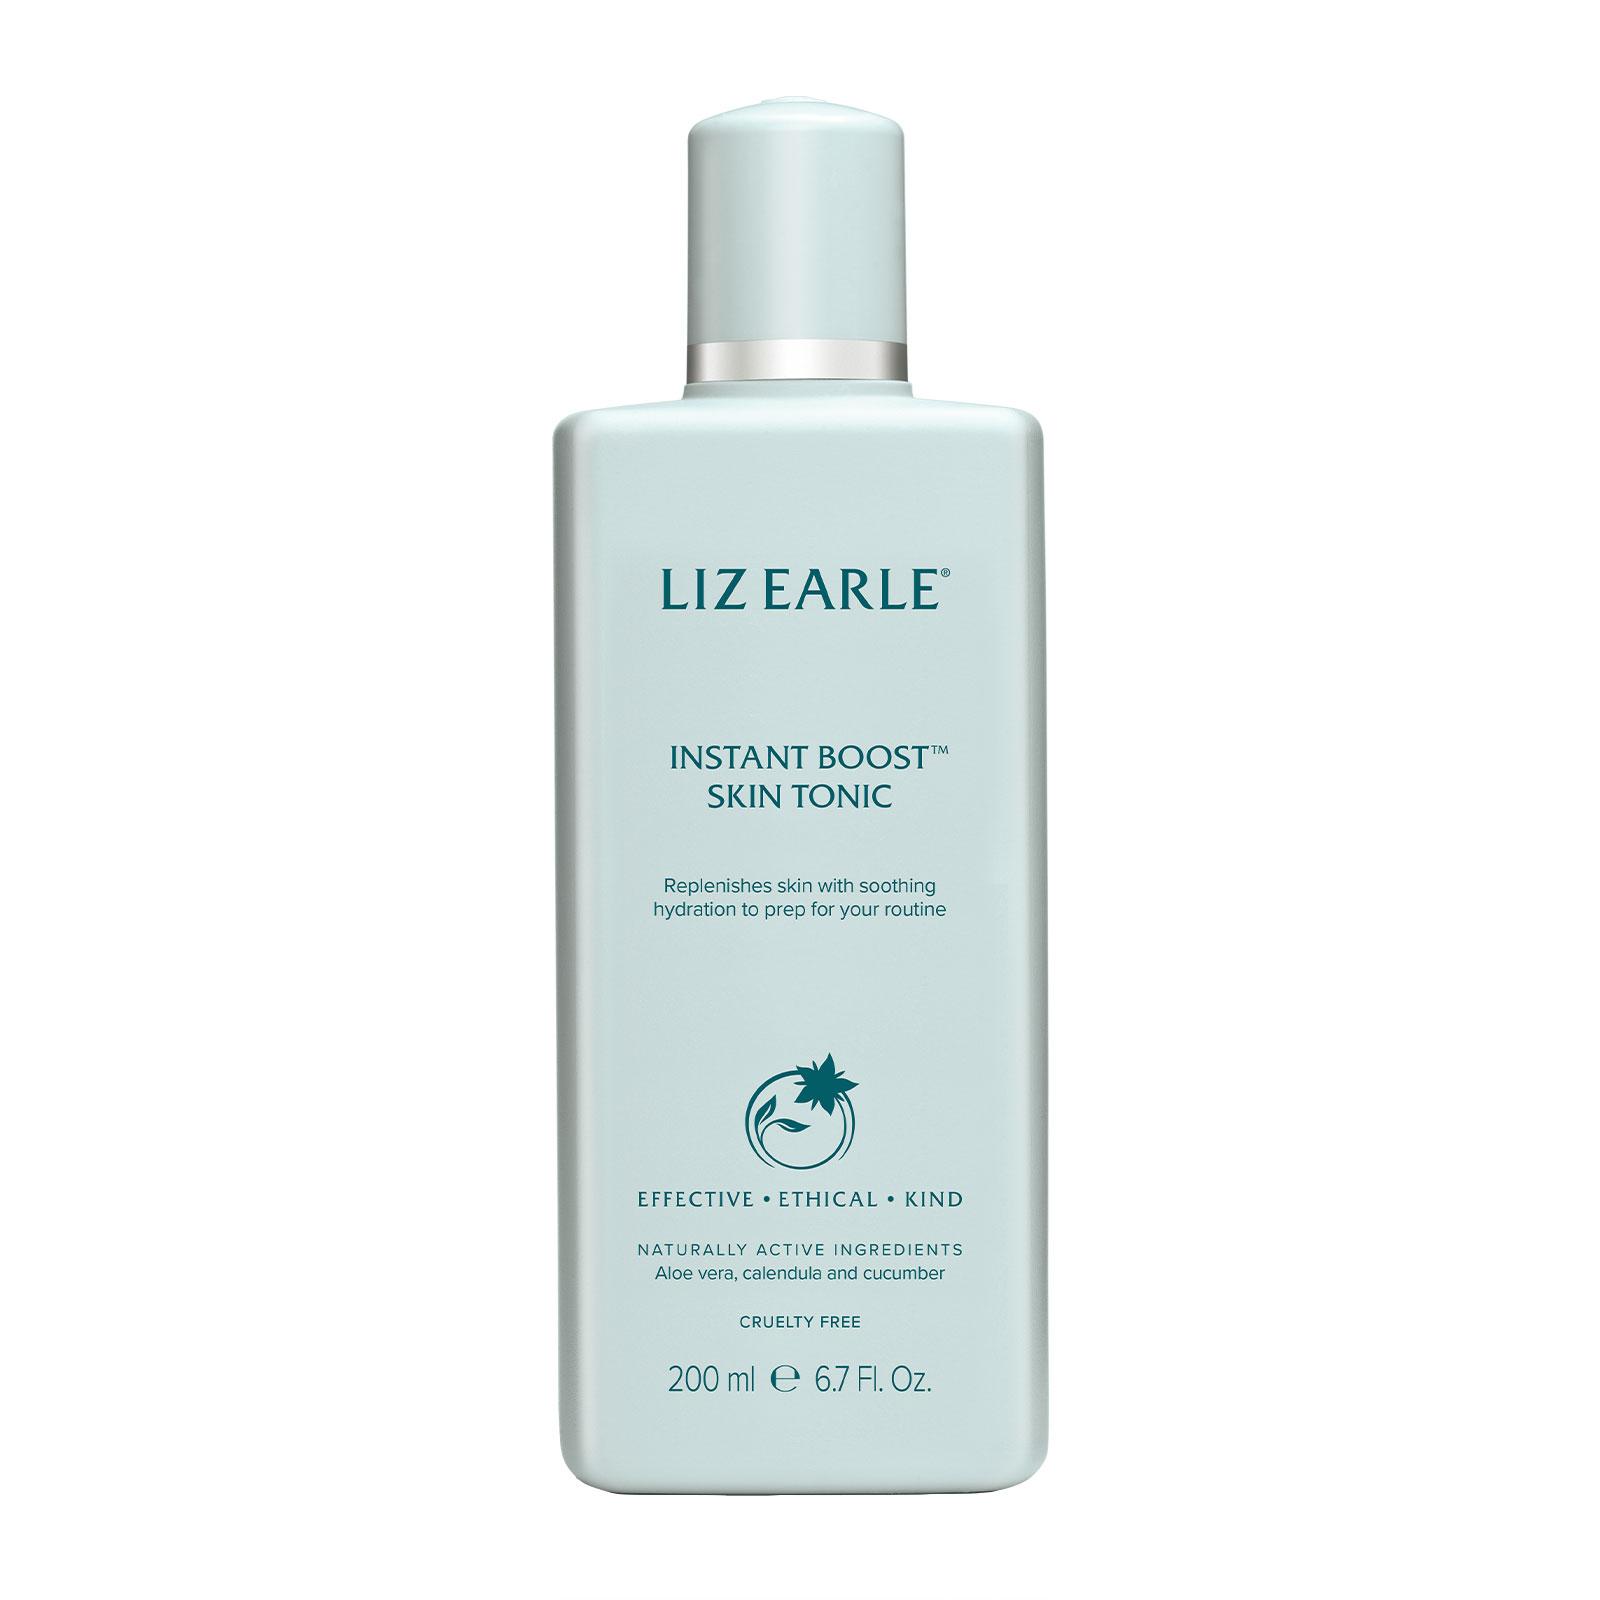 Liz Earle Instant Boost Skin Tonic 200ml Sephora Uk